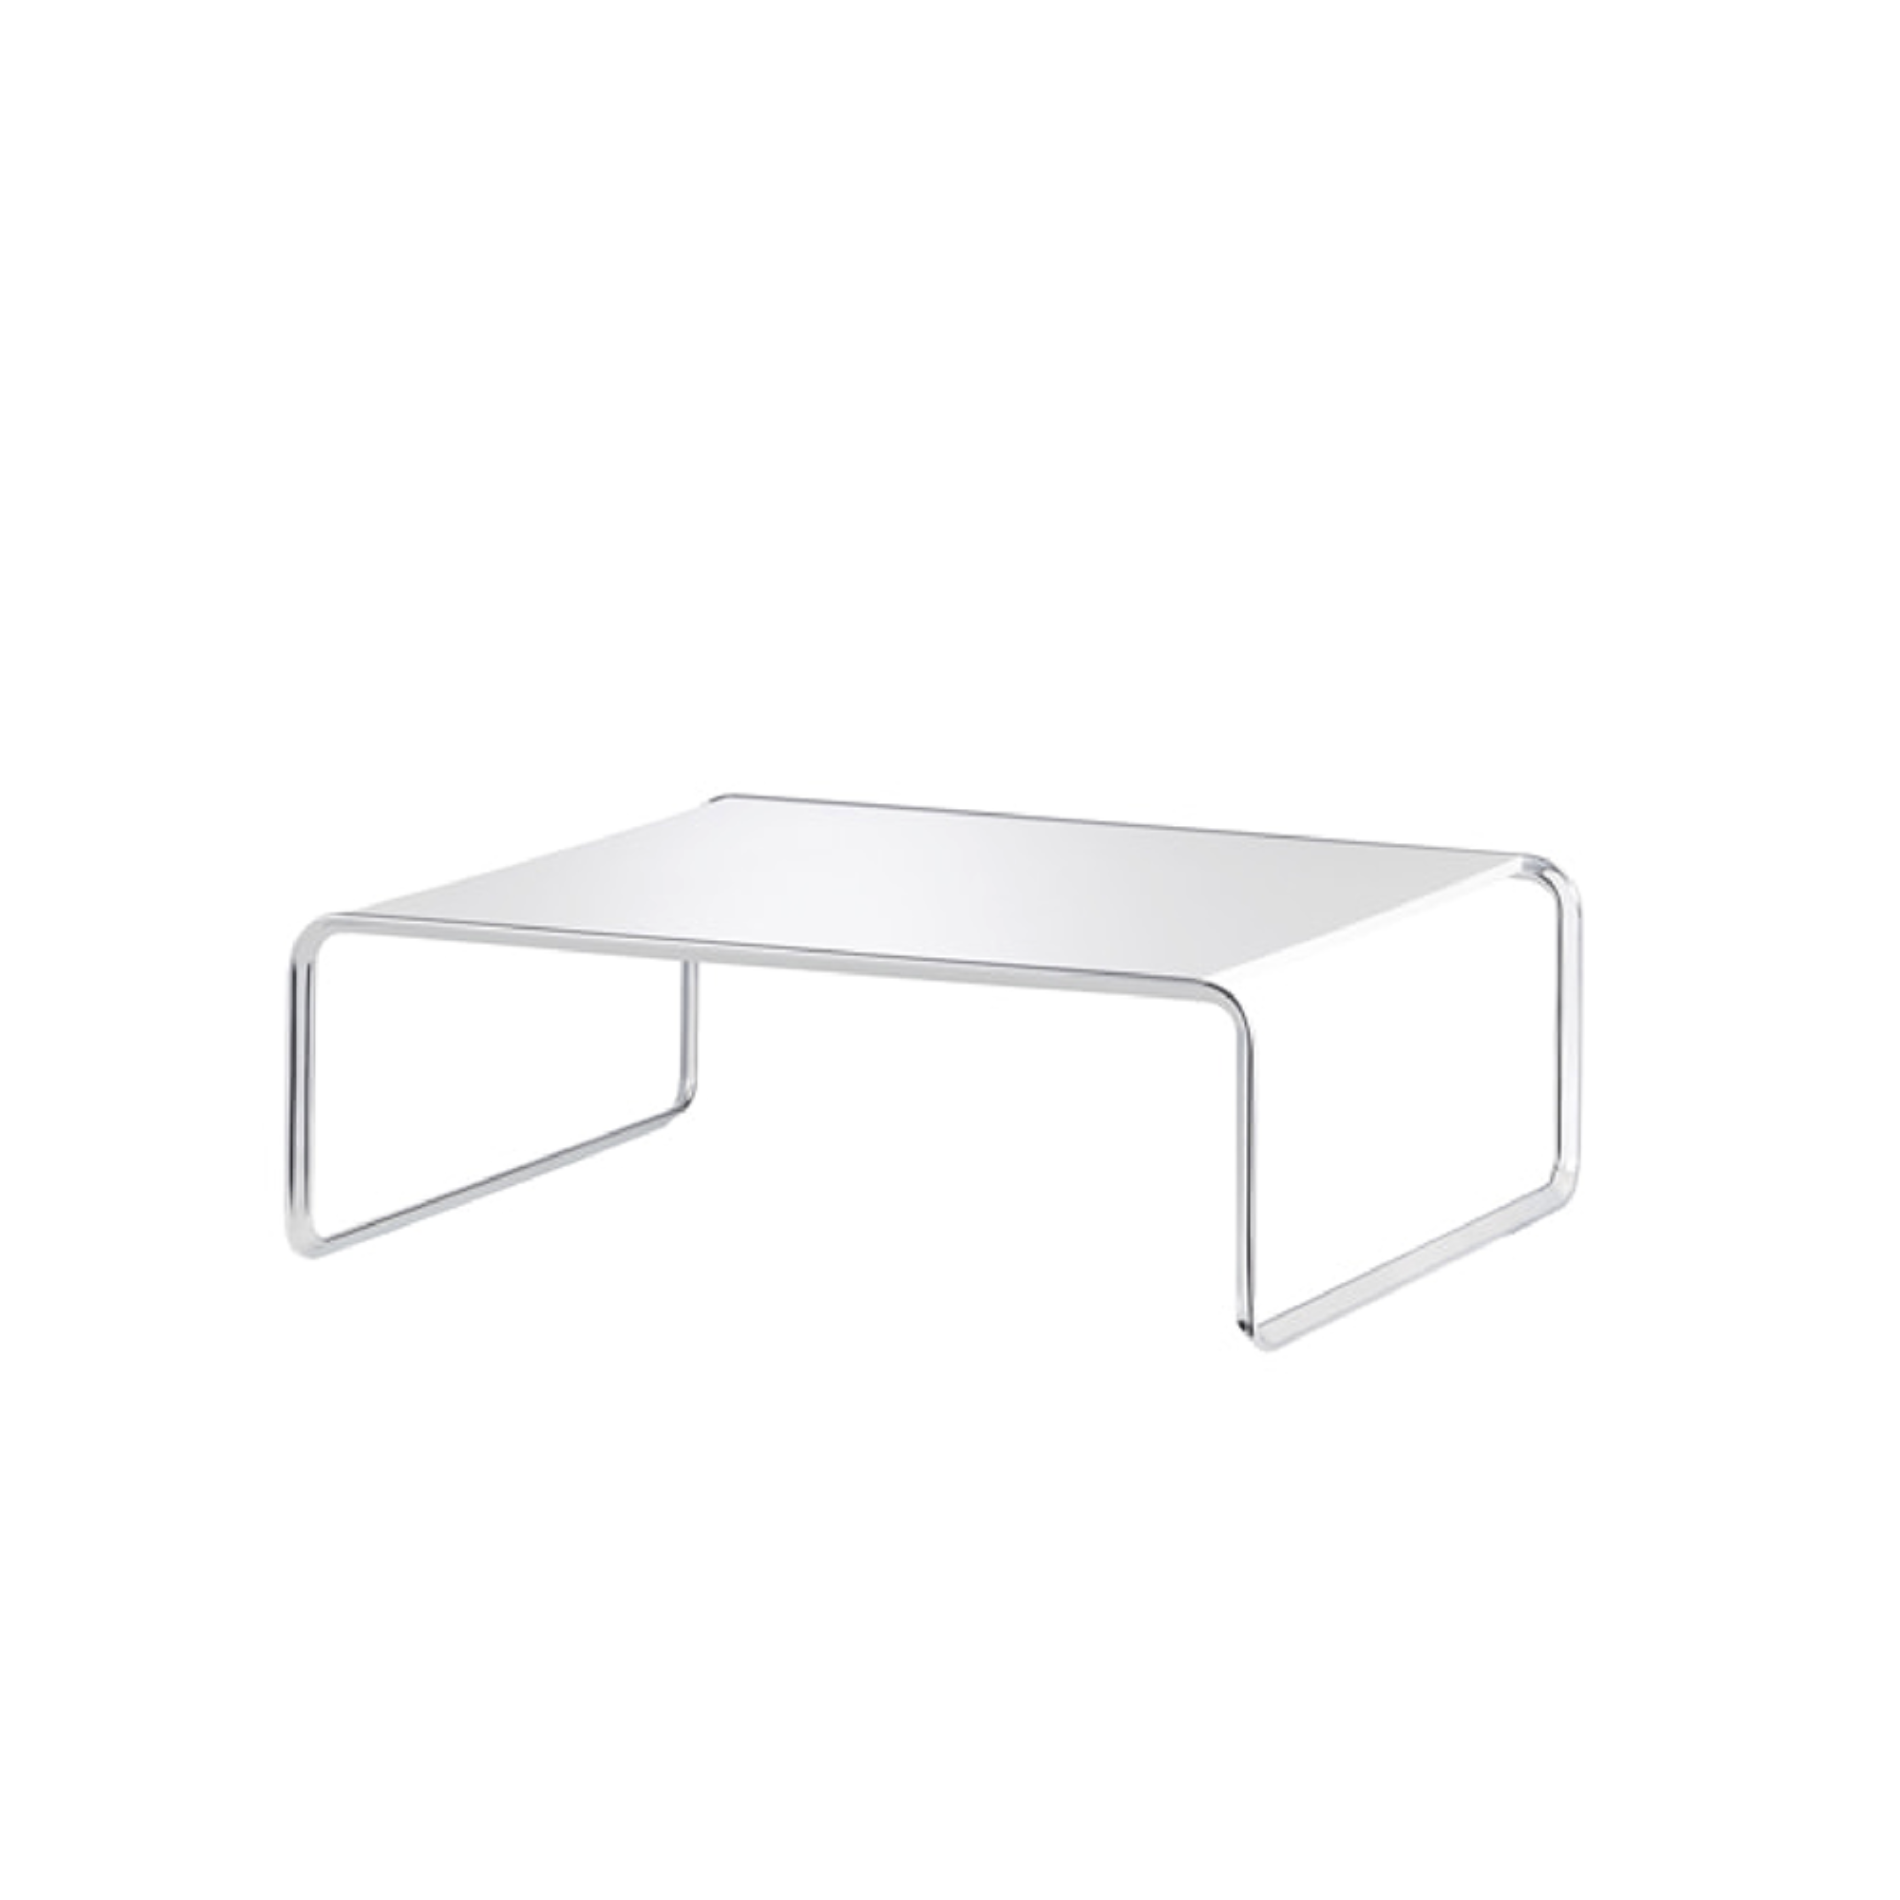 TECTA K1B Oblique Couch Table - Pure White 86Cm